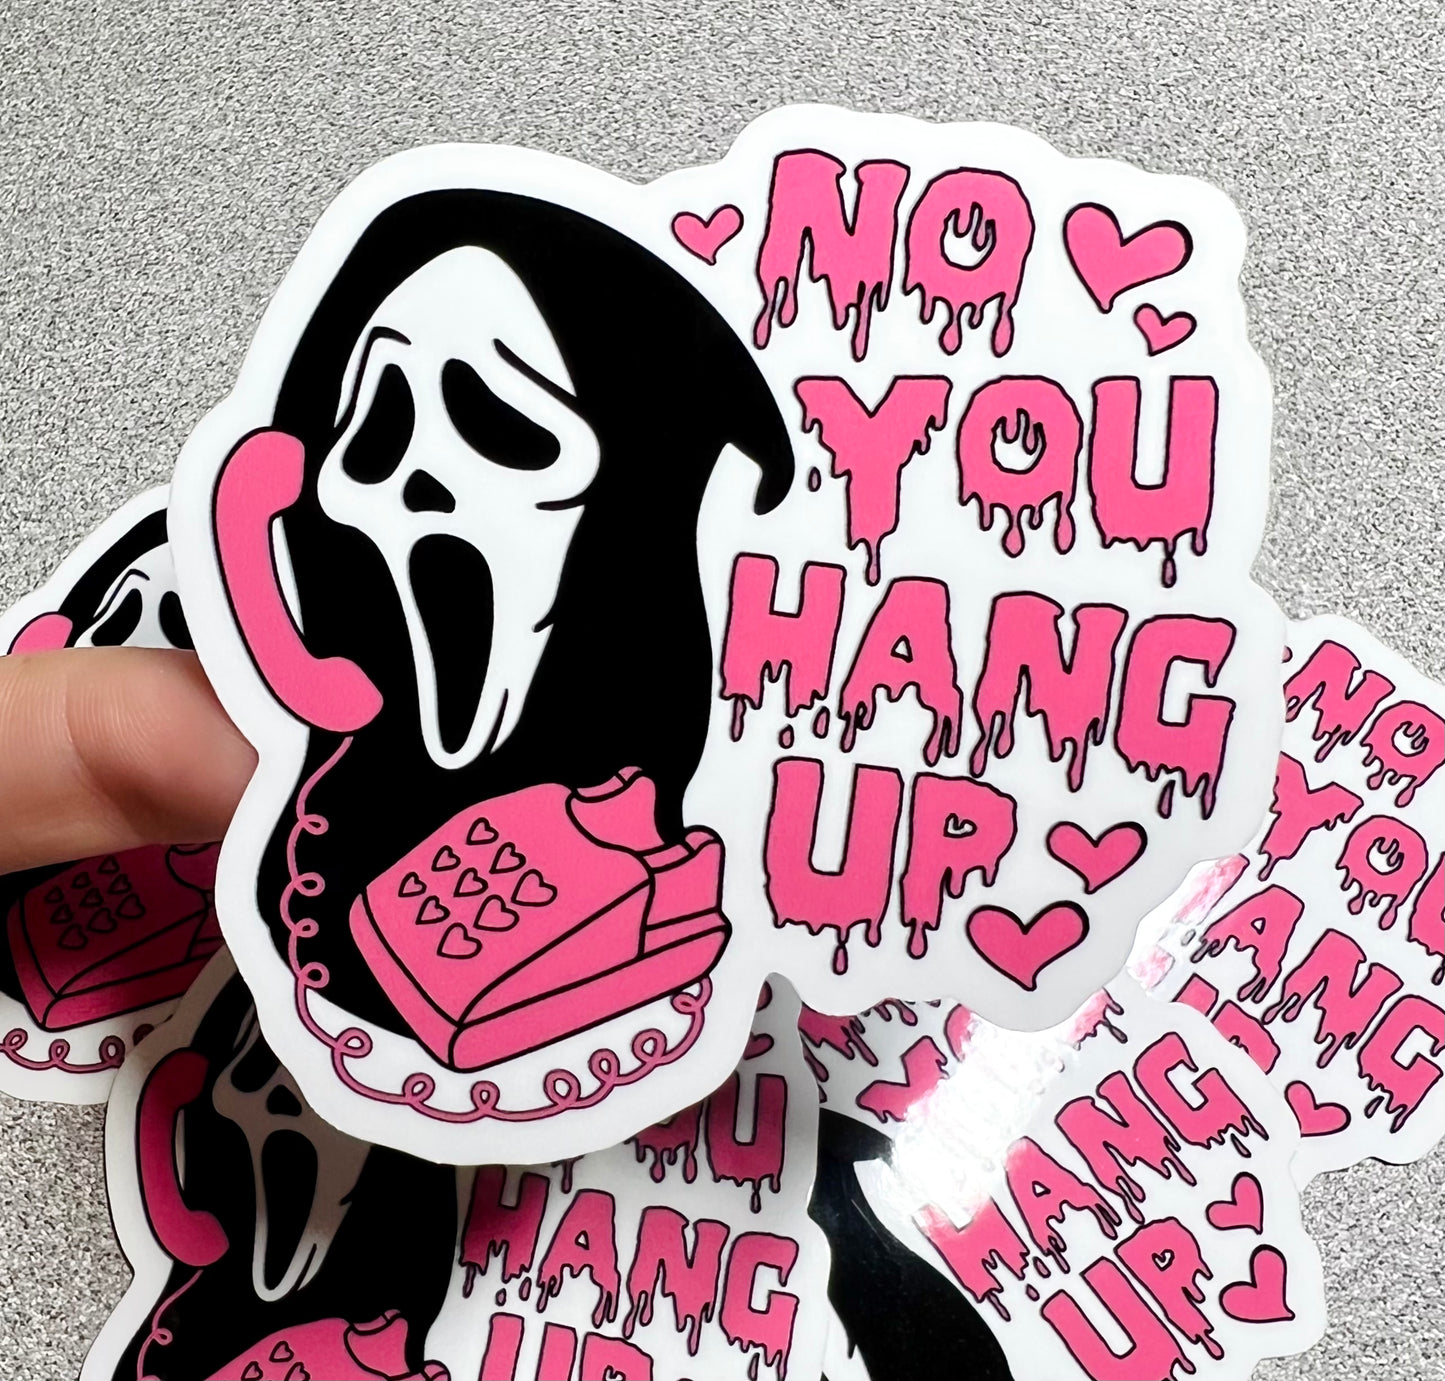 Hang Up Scream Vinyl Sticker Decal - Cherry Pit Designs